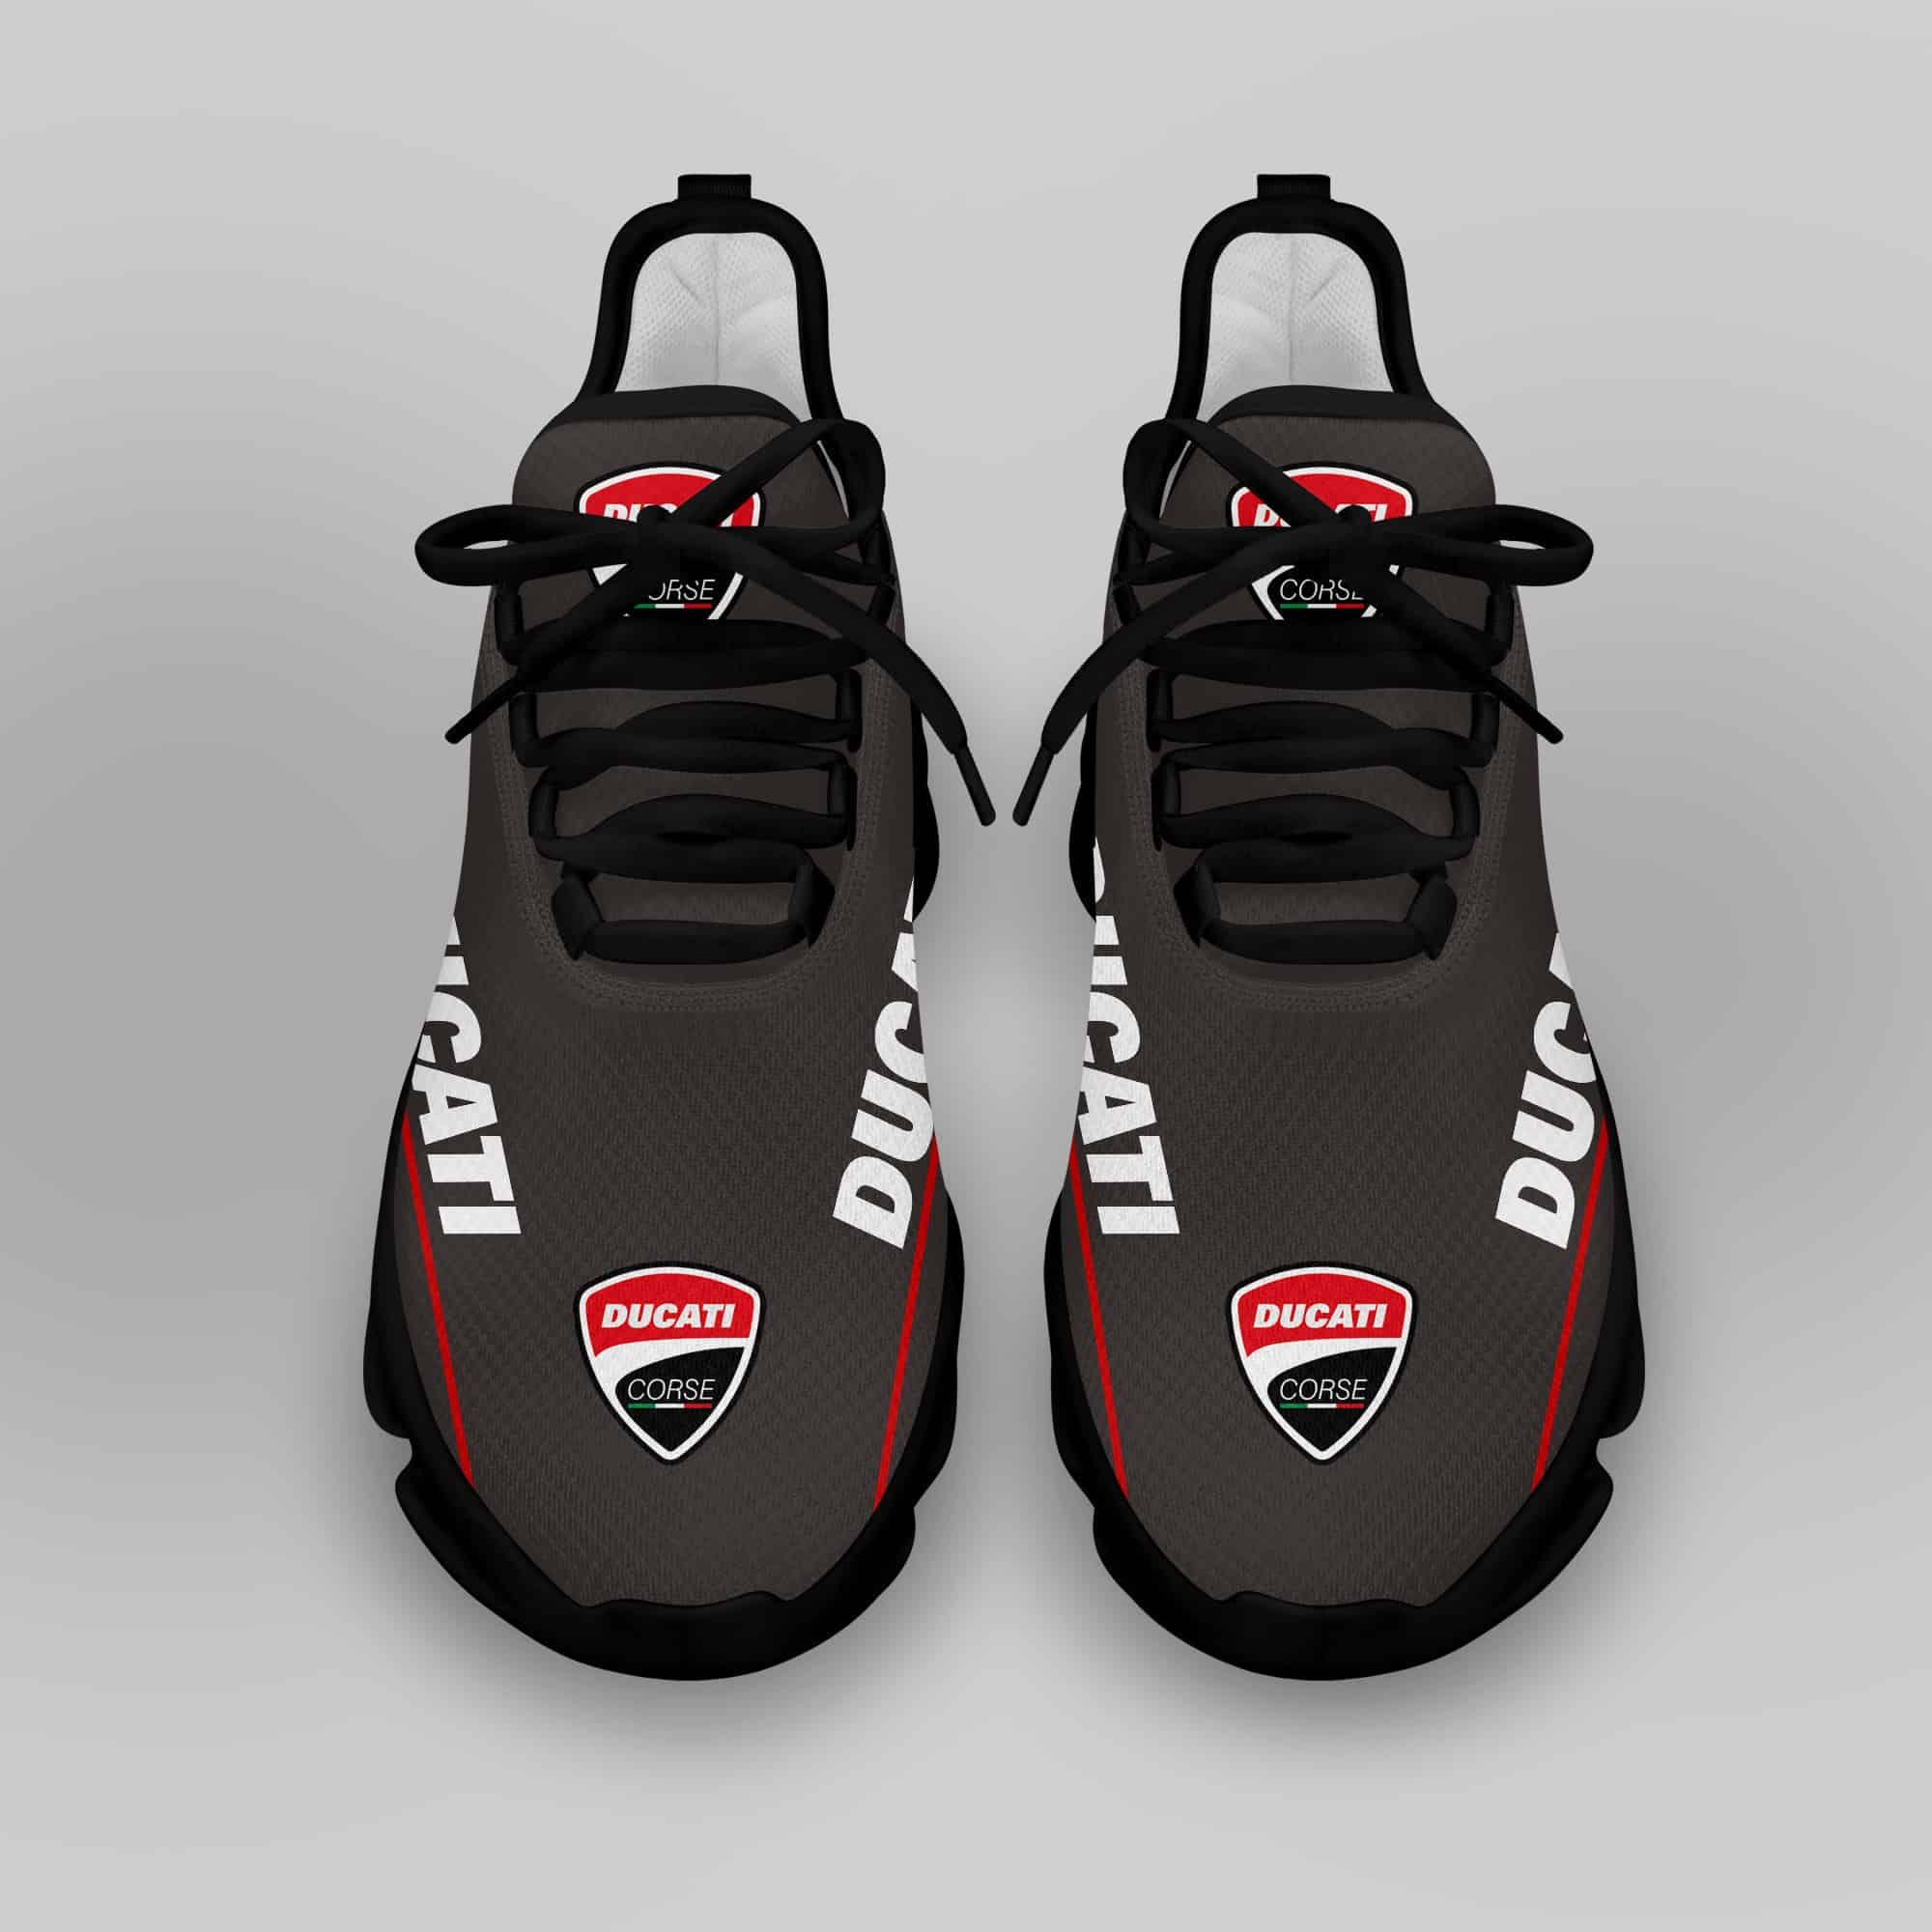 Ducati Racing Running Shoes Max Soul Shoes Sneakers Ver 23 4